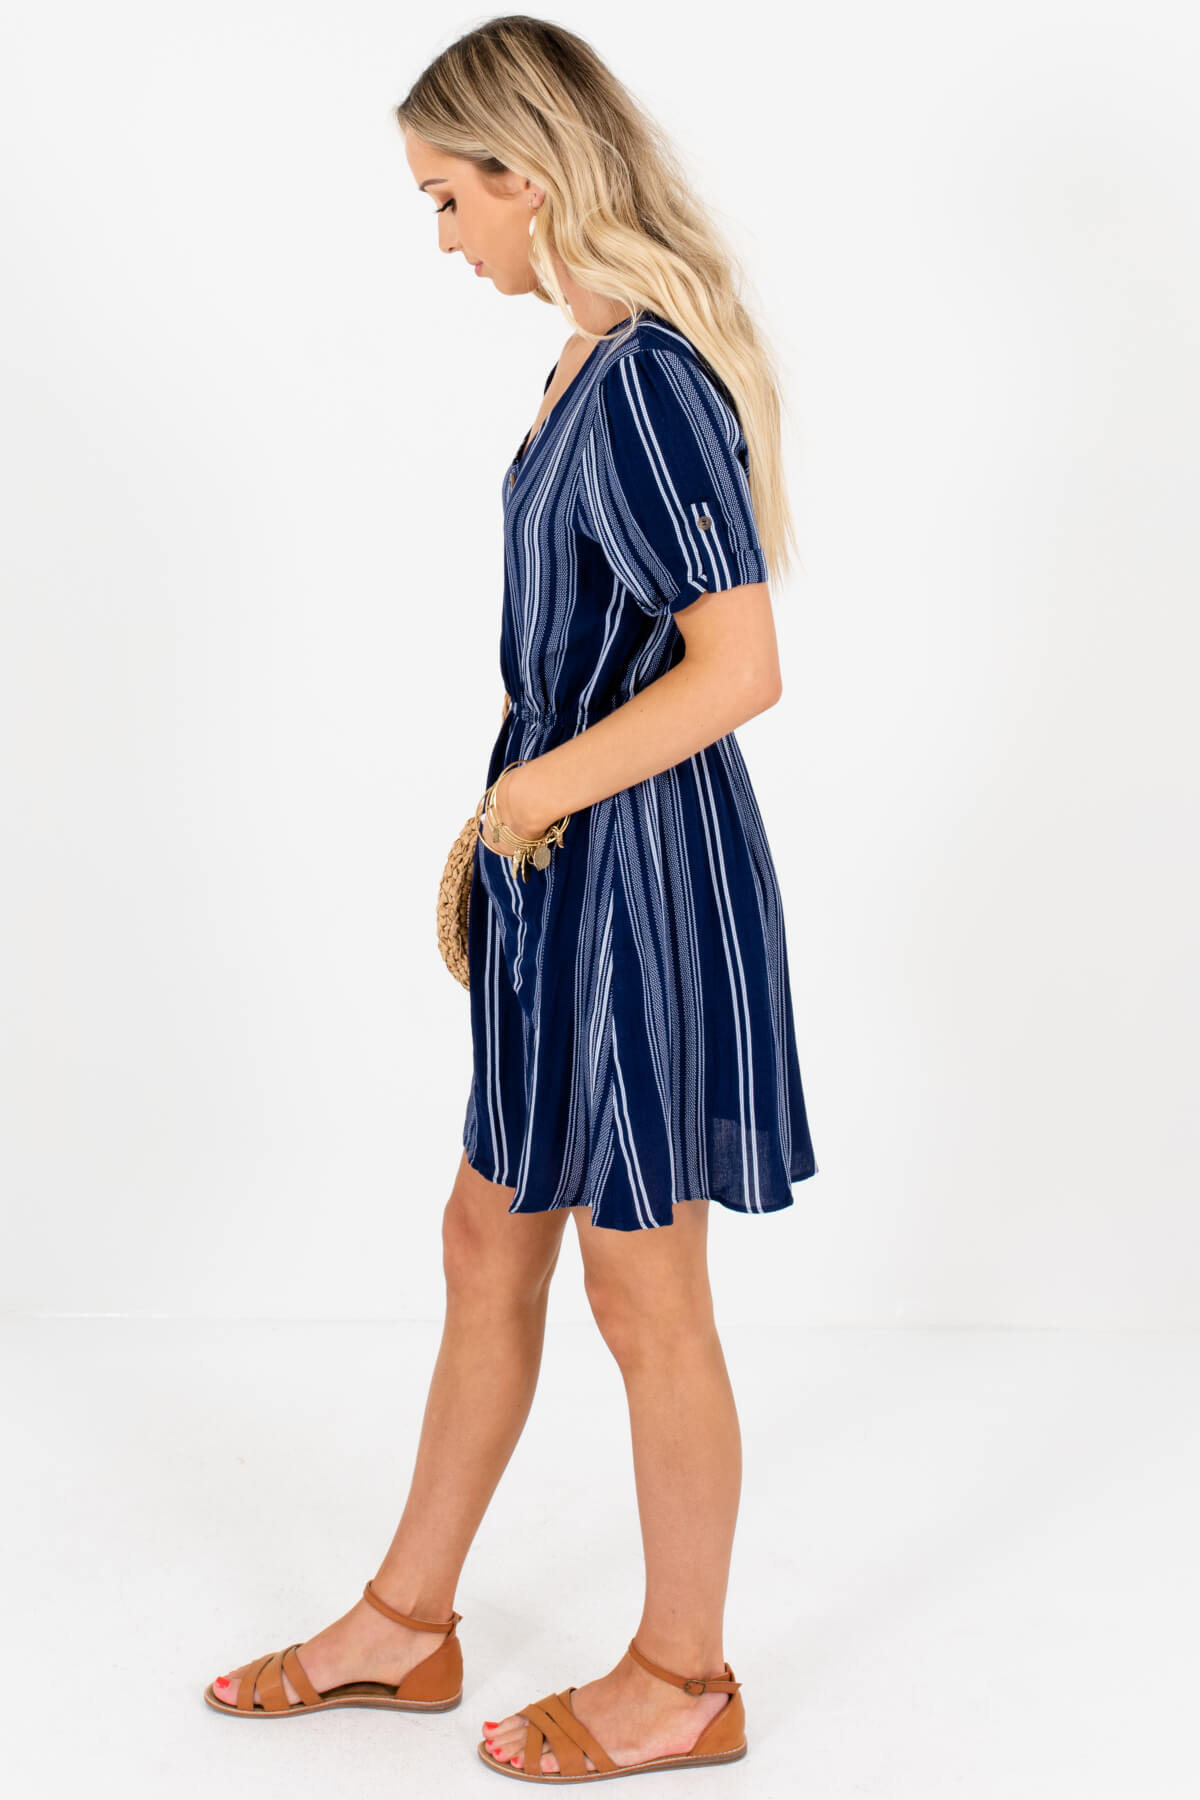 Navy Blue White Striped Mini Dresses Affordable Online Boutique